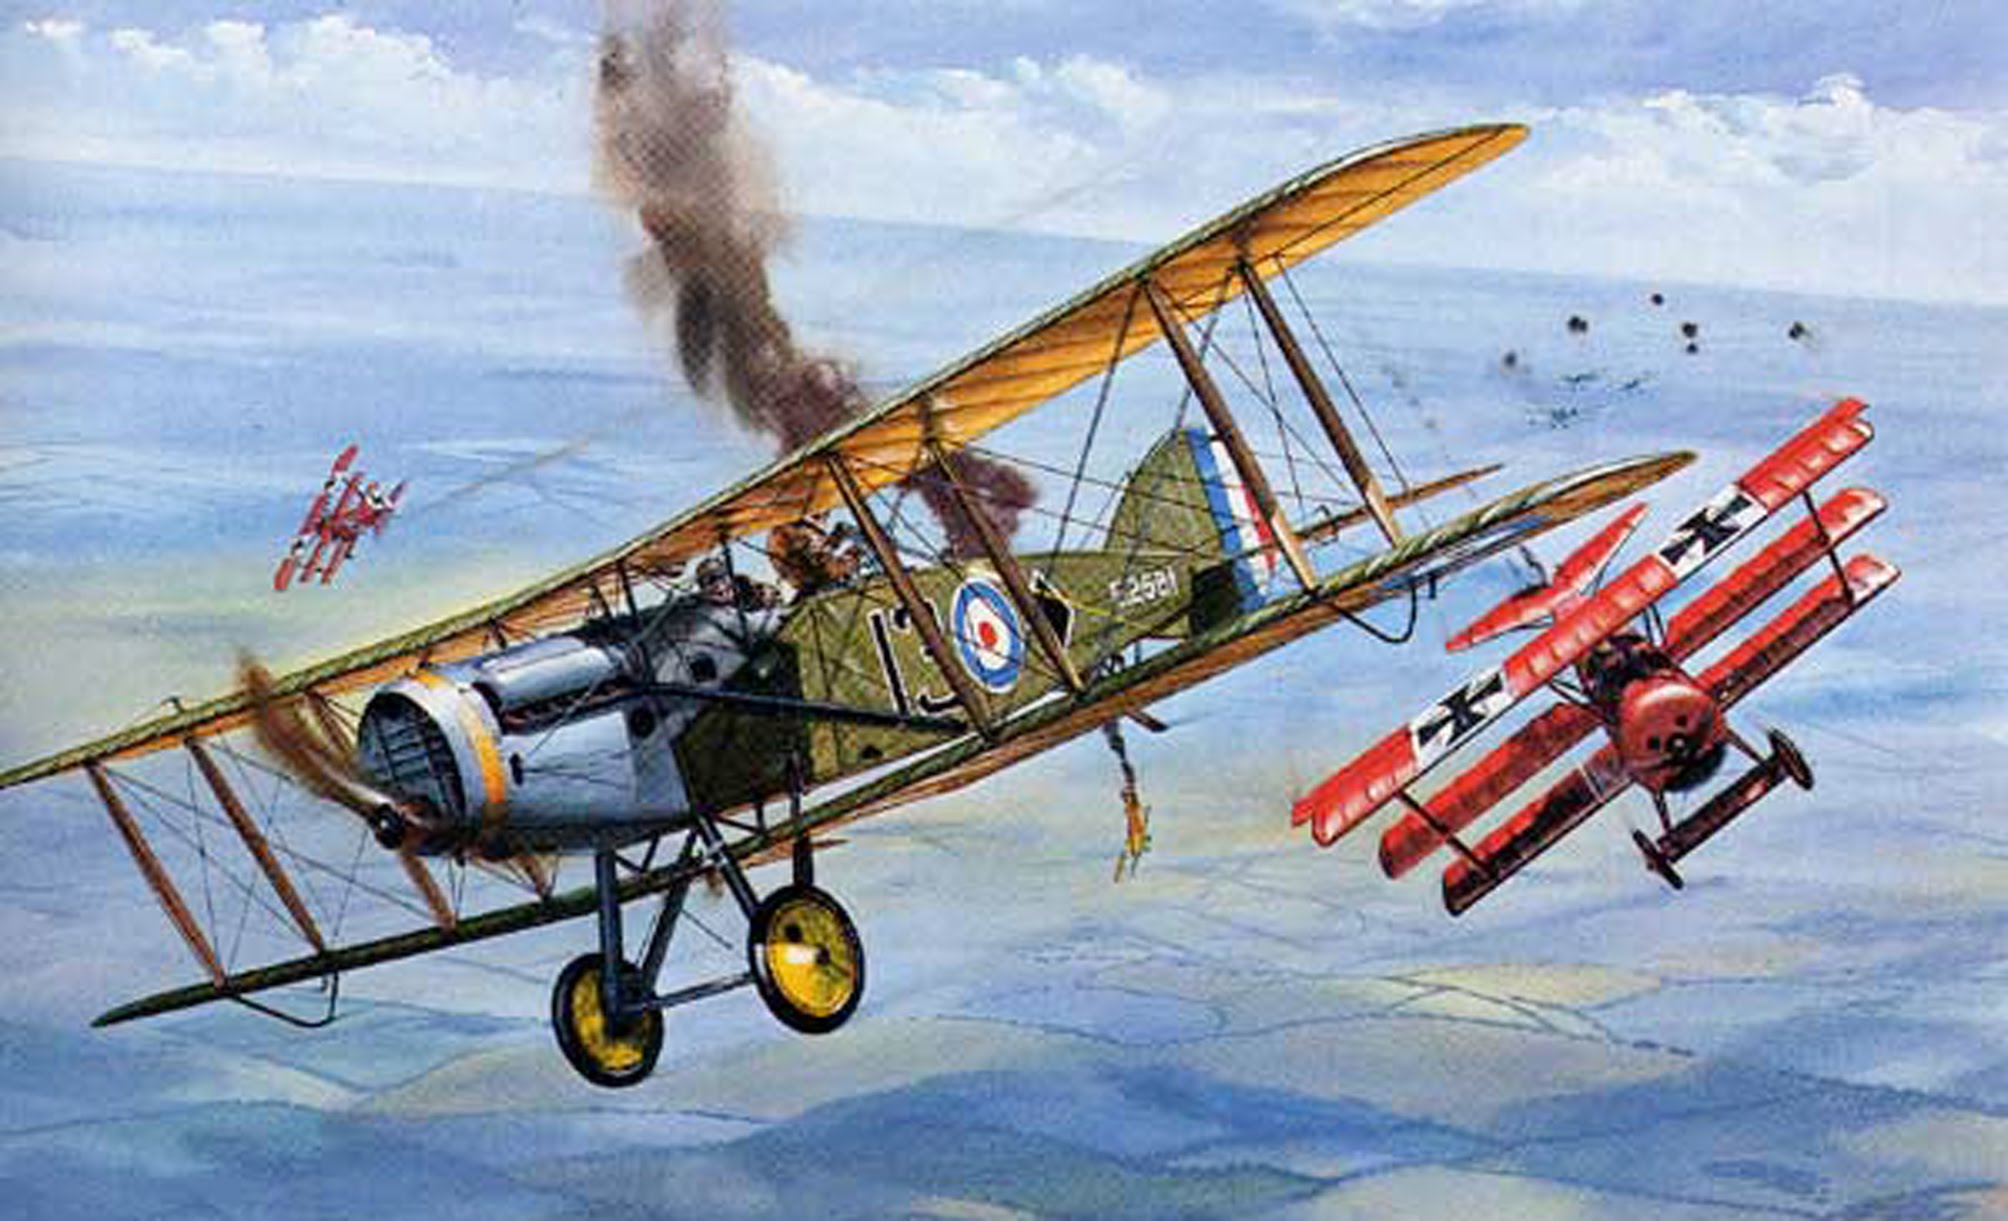 Artist depiction of a Fokker Triplane chasing a Bristol F2B